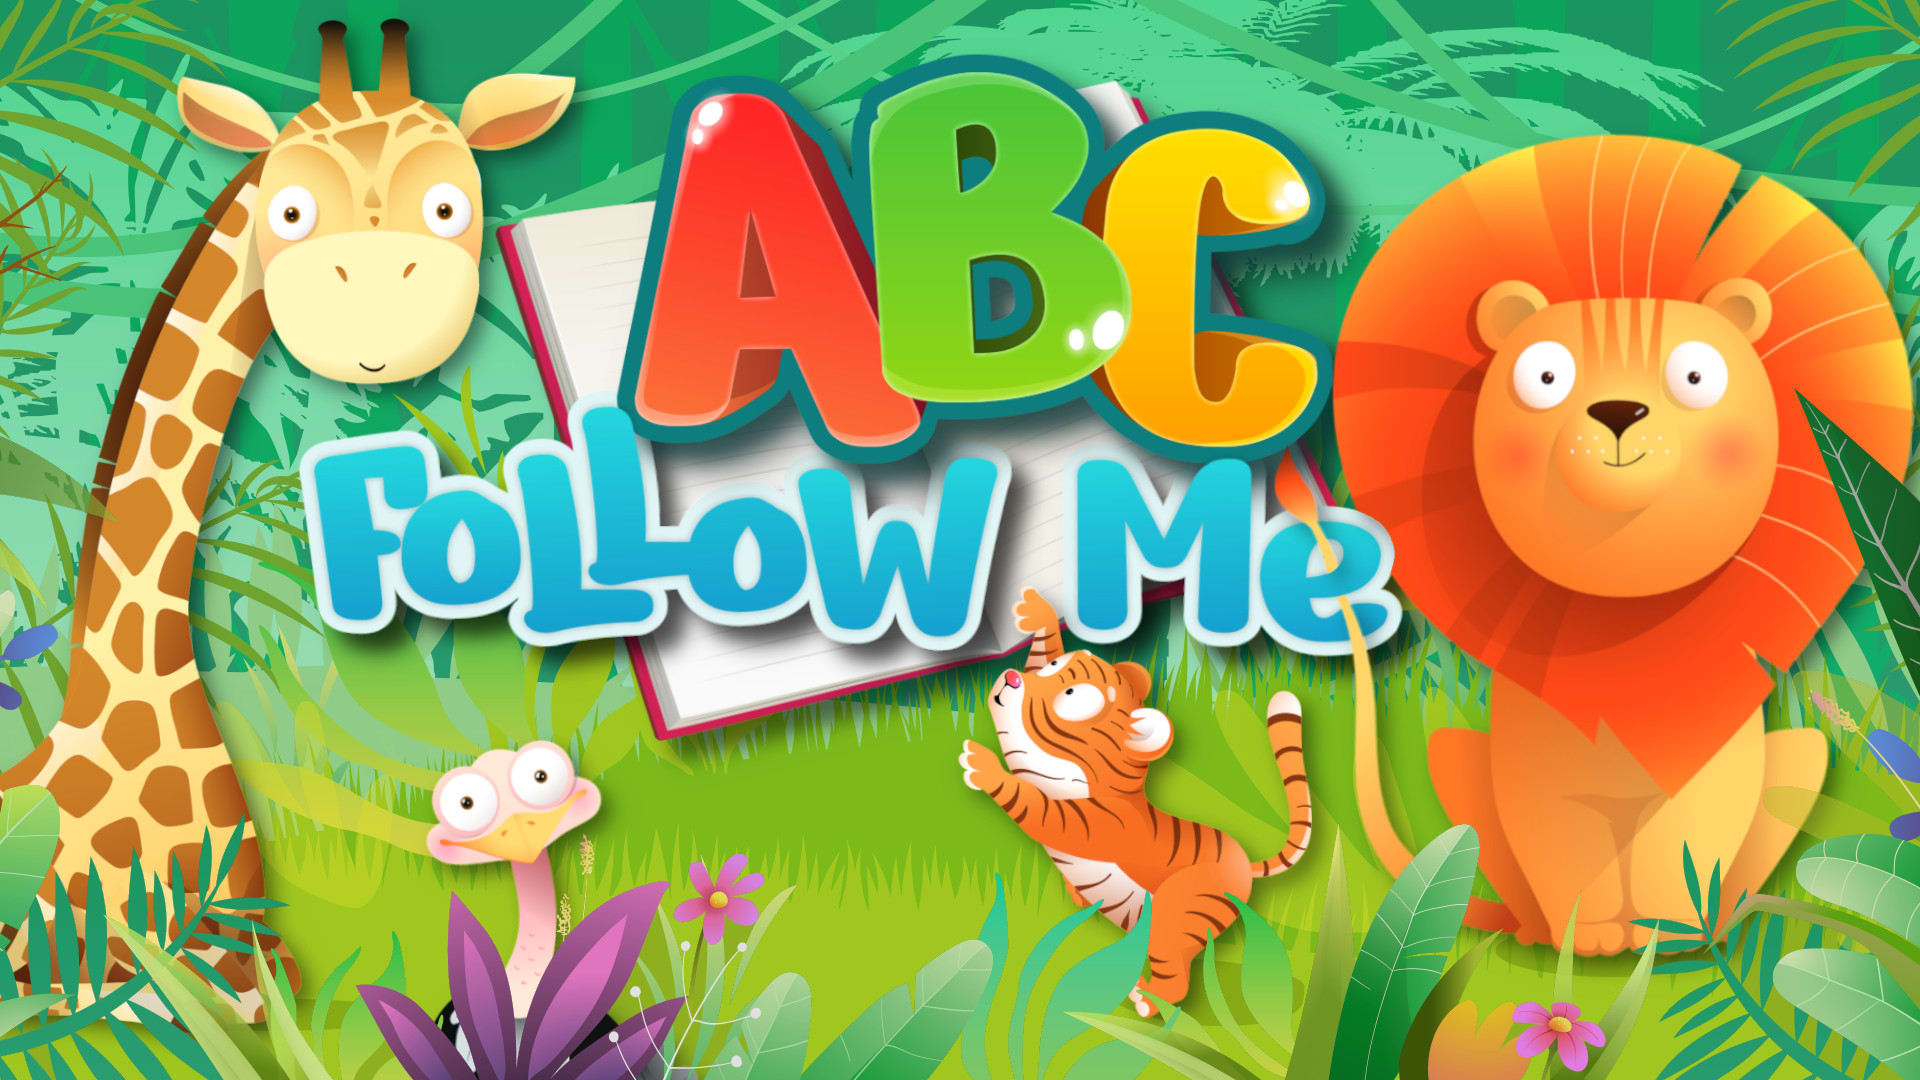 ABC Follow Me: Animals